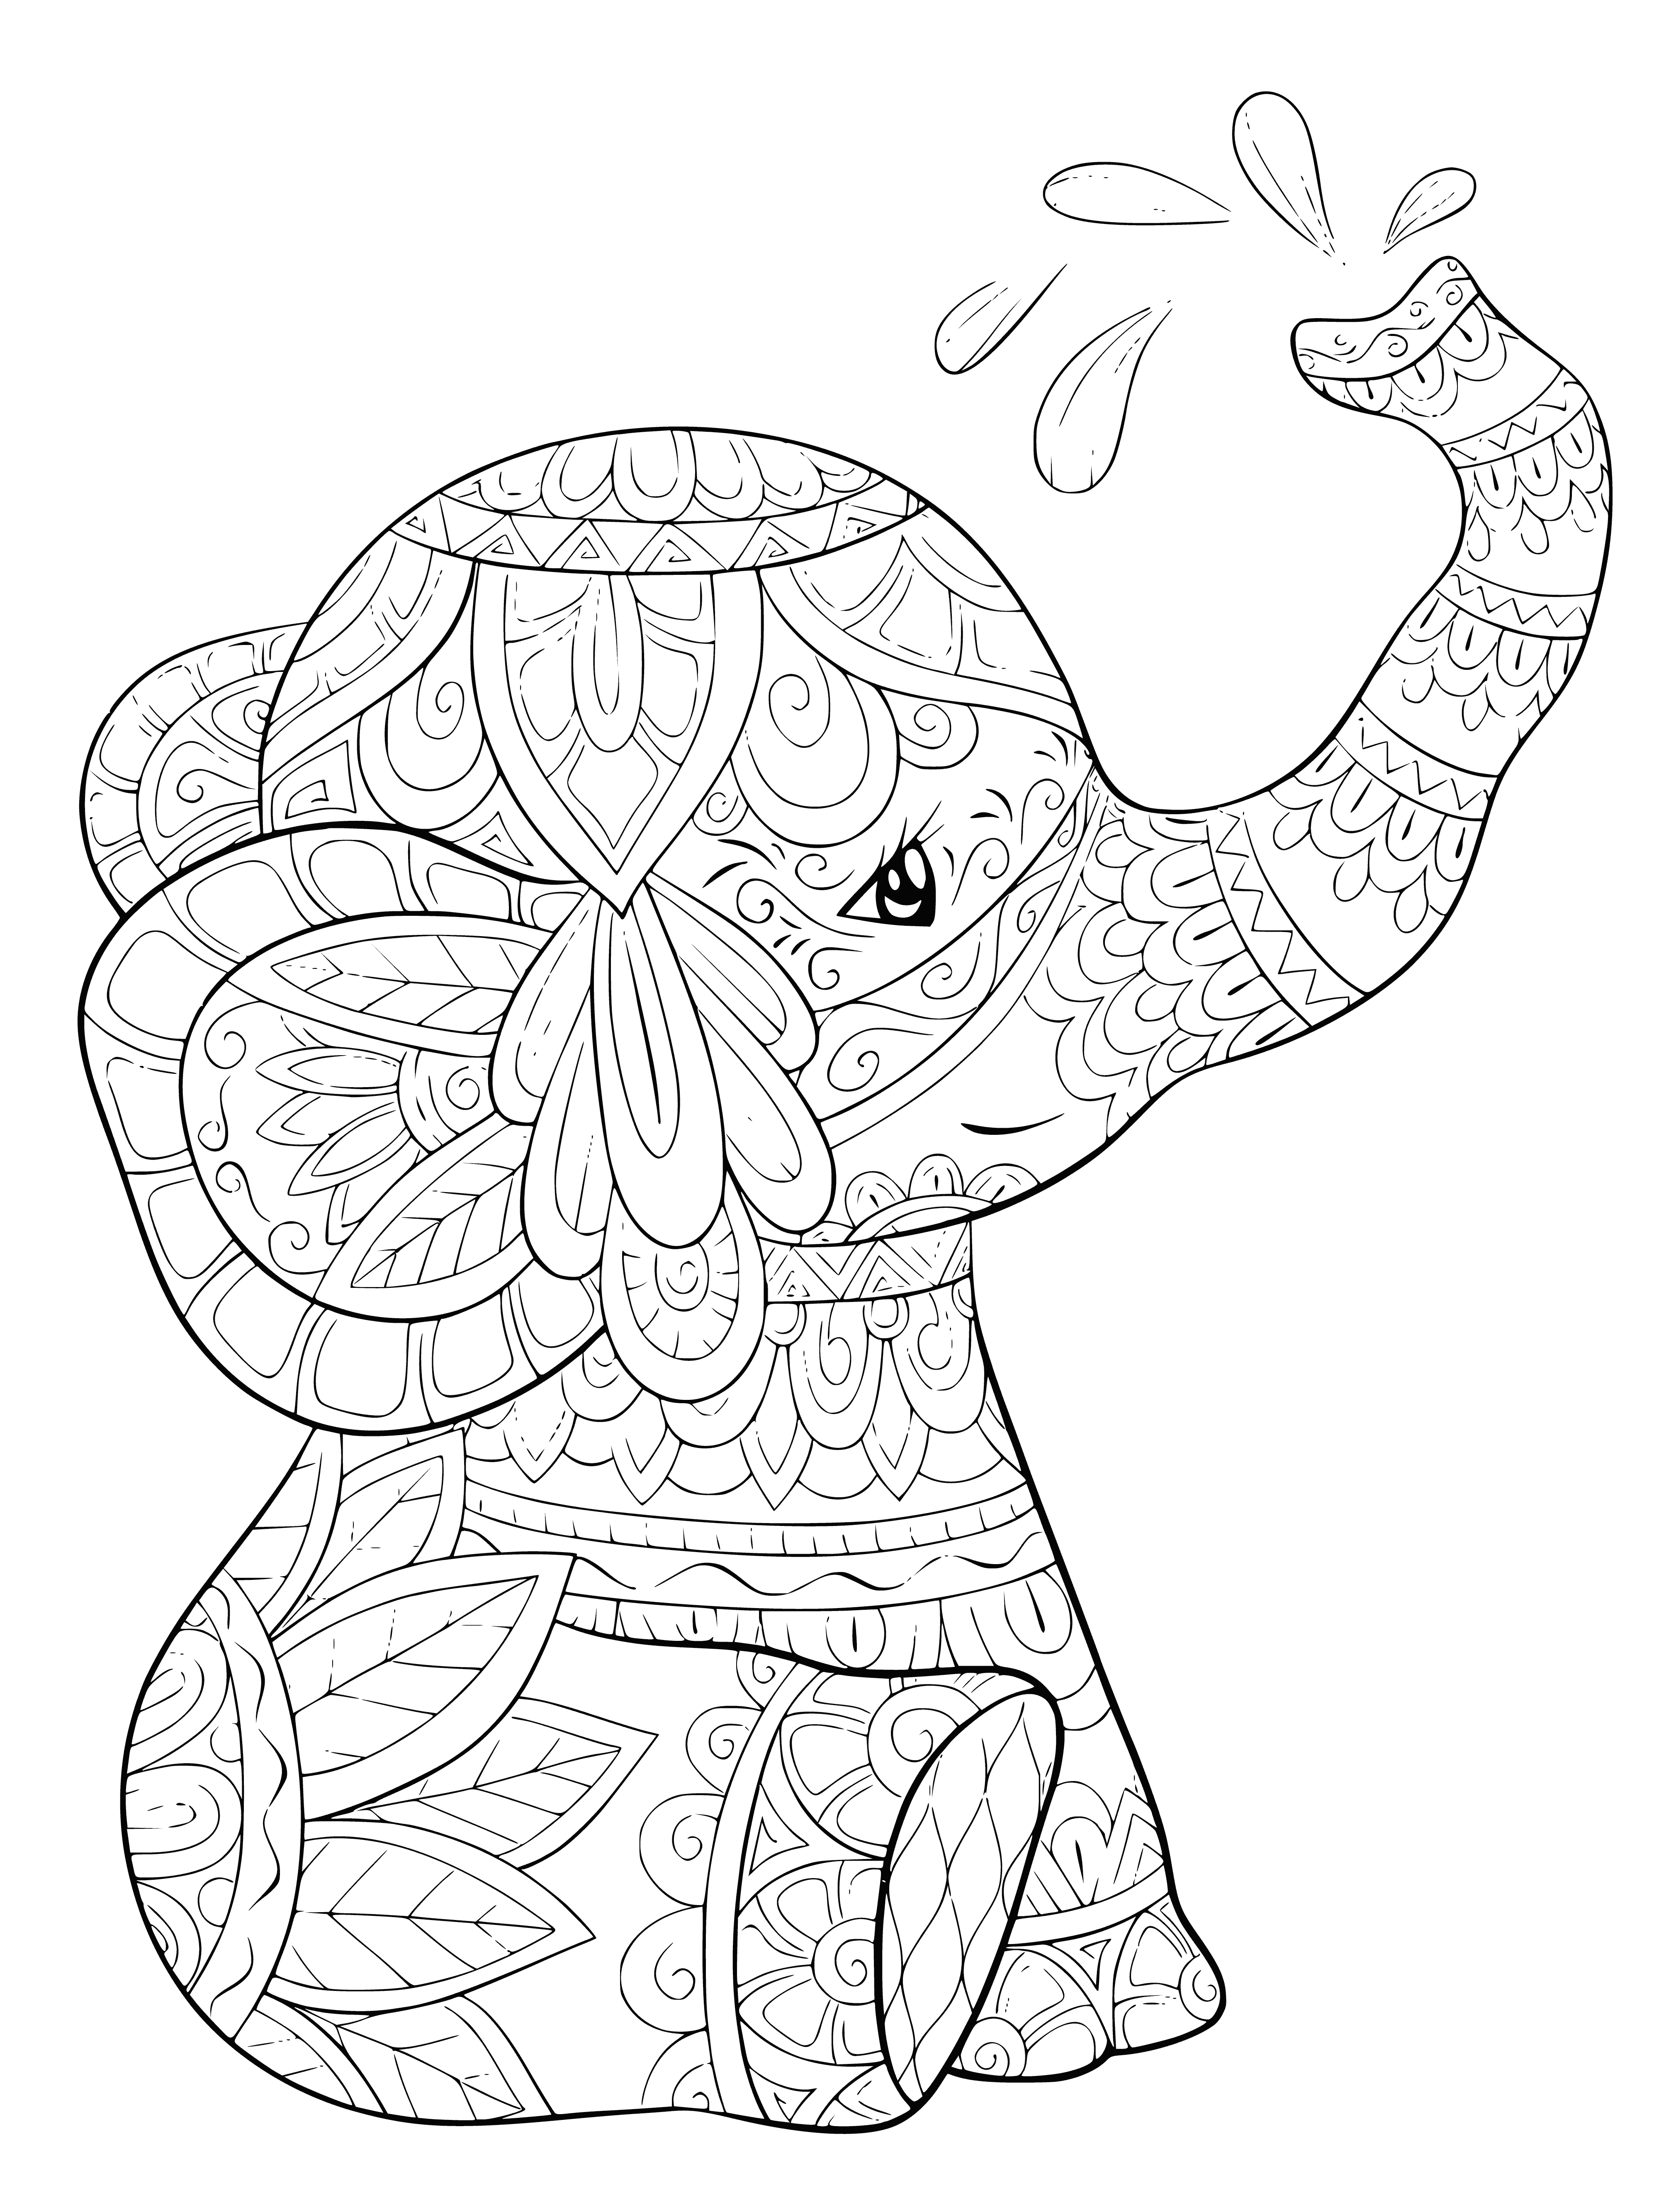 Elefante bébé página para colorir